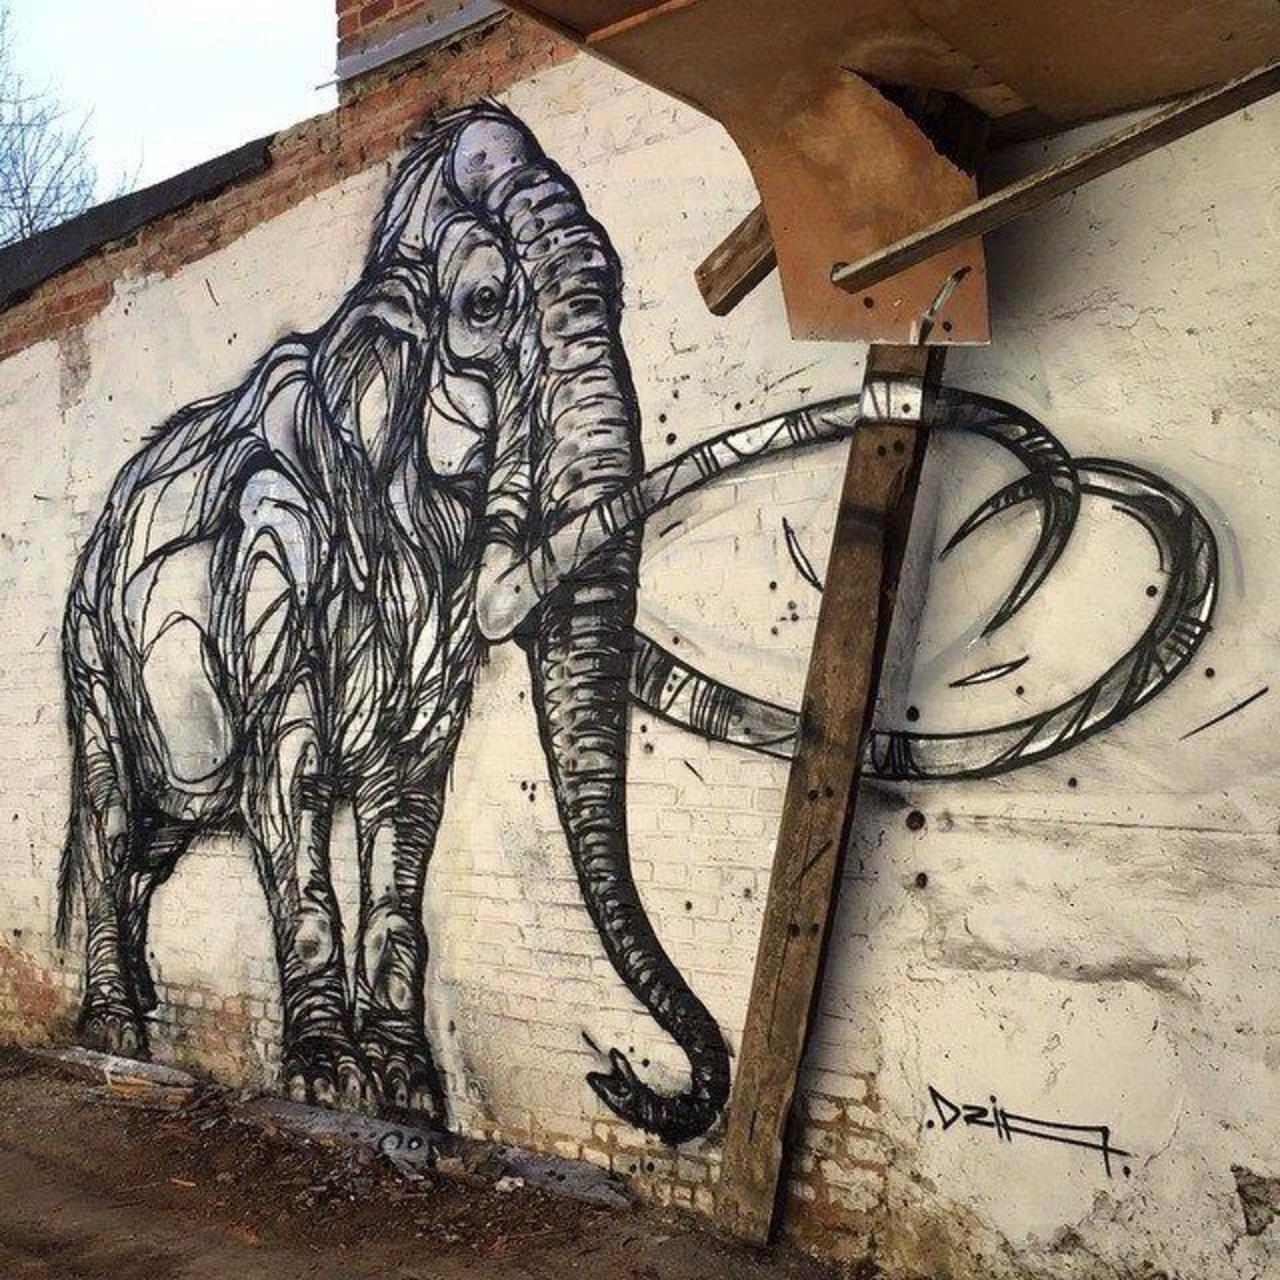 Mammoth. New nature in Street Art wall by DZIA 

#art #graffiti #mural #streetart http://t.co/lw0DrsZtc7